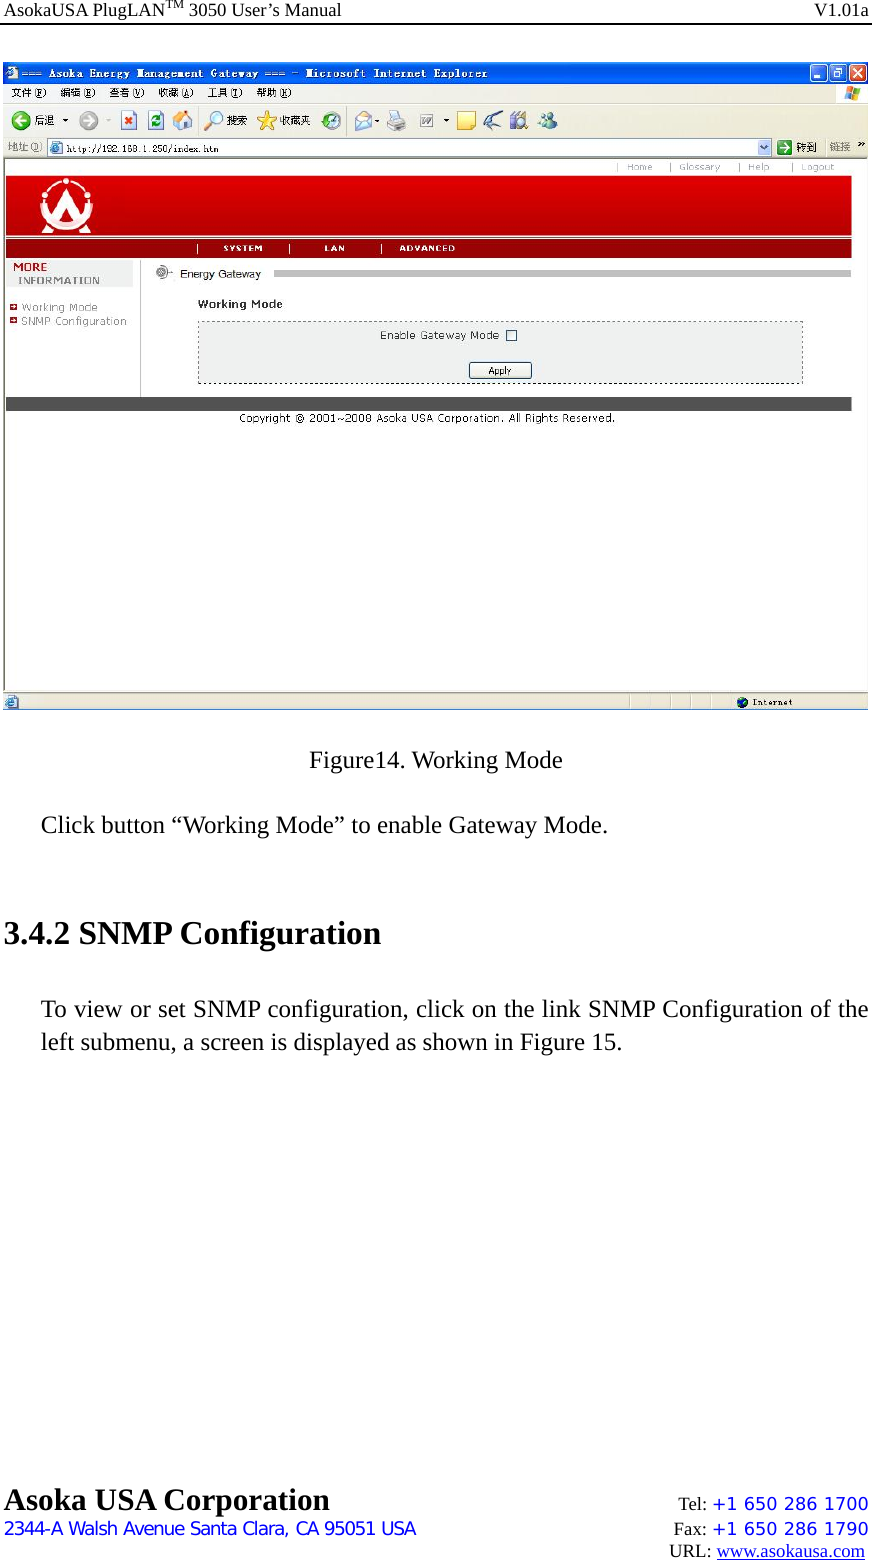 AsokaUSA PlugLANTM 3050 User’s Manual    V1.01a Asoka USA Corporation    Tel: +1 650 286 1700    2344-A Walsh Avenue Santa Clara, CA 95051 USA   Fax: +1 650 286 1790                                                                                     URL: www.asokausa.com      Figure14. Working Mode  Click button “Working Mode” to enable Gateway Mode.  3.4.2 SNMP Configuration To view or set SNMP configuration, click on the link SNMP Configuration of the left submenu, a screen is displayed as shown in Figure 15. 